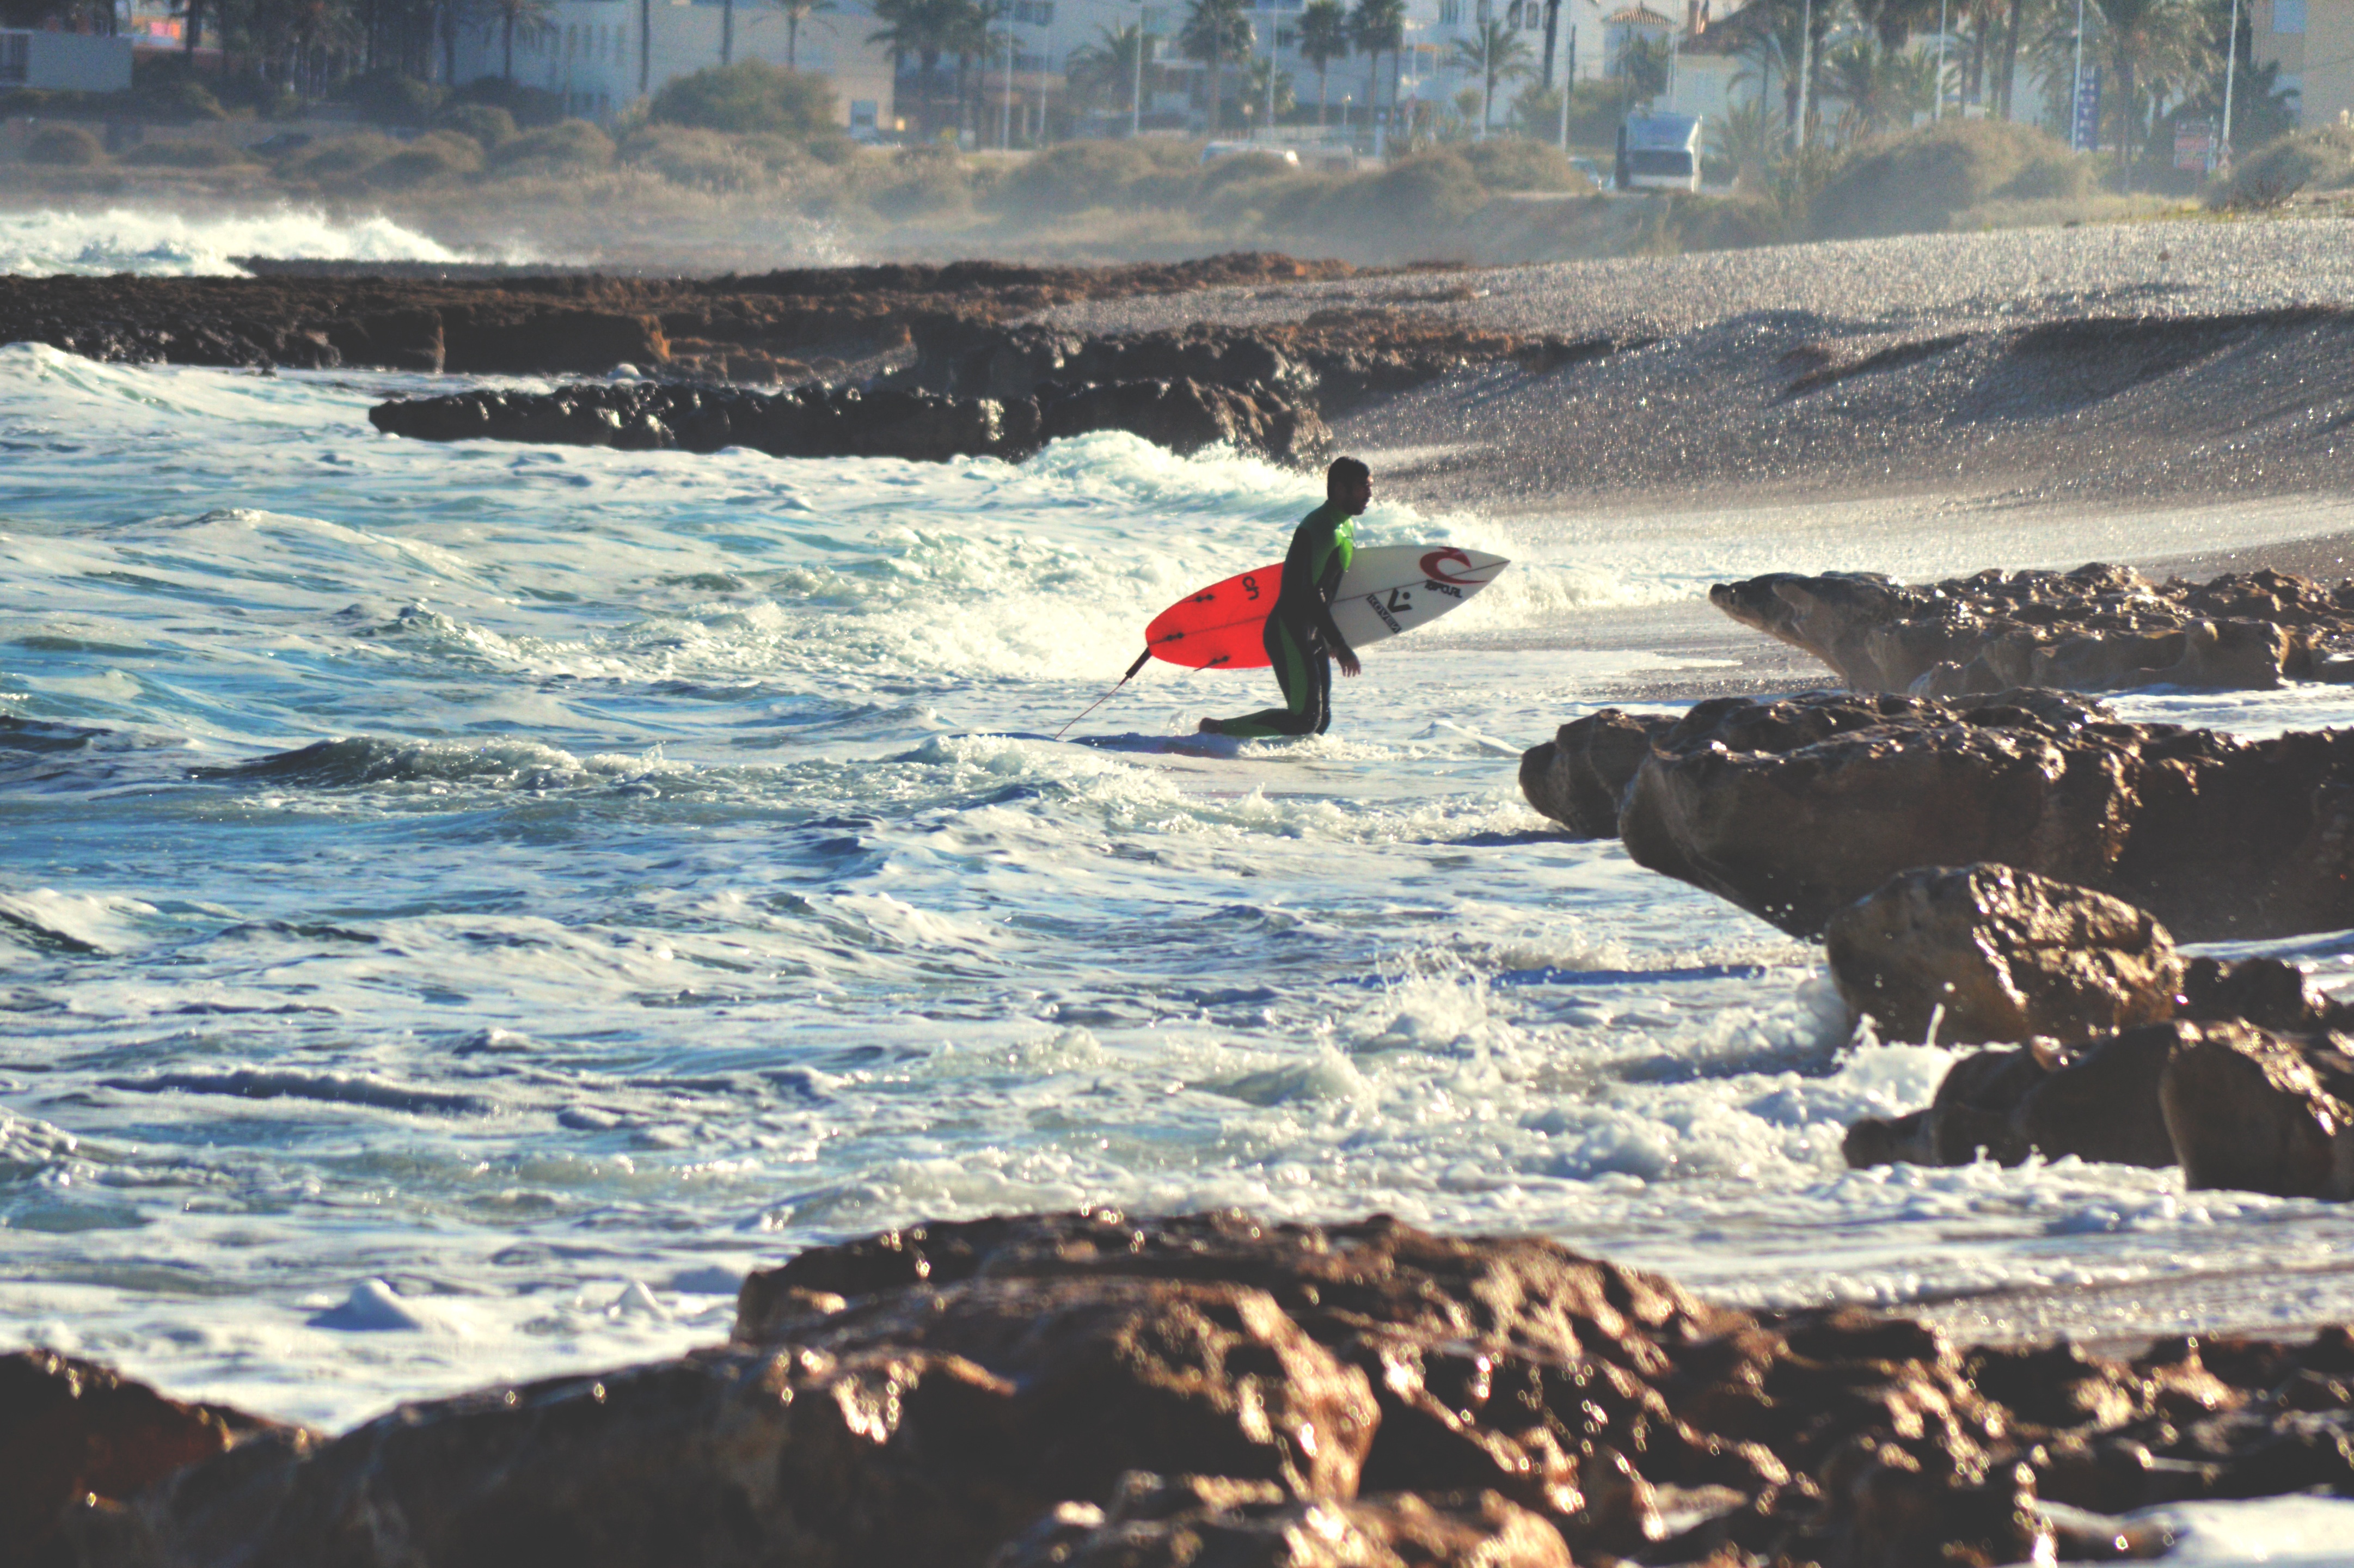 Surfer photo